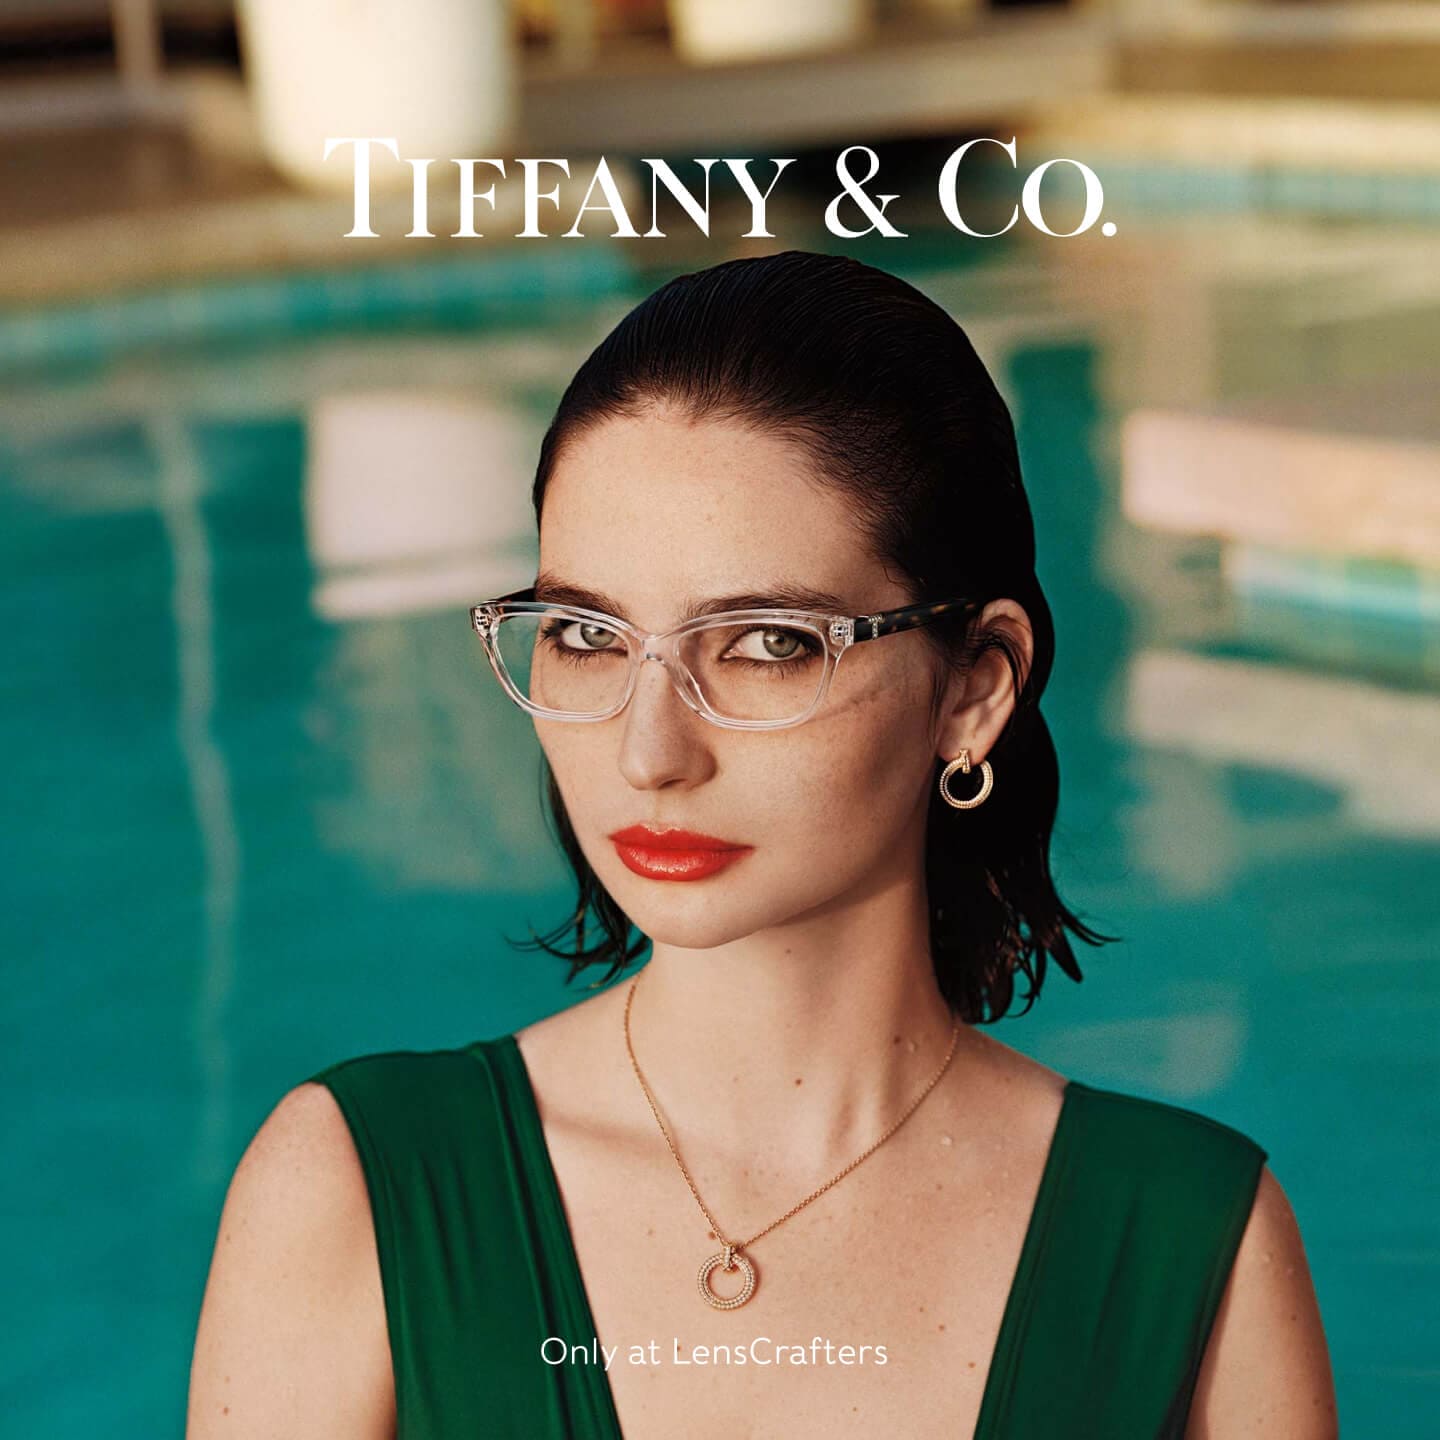 Tiffany Sunglasses & Eyeglasses – Shop Tiffany frames